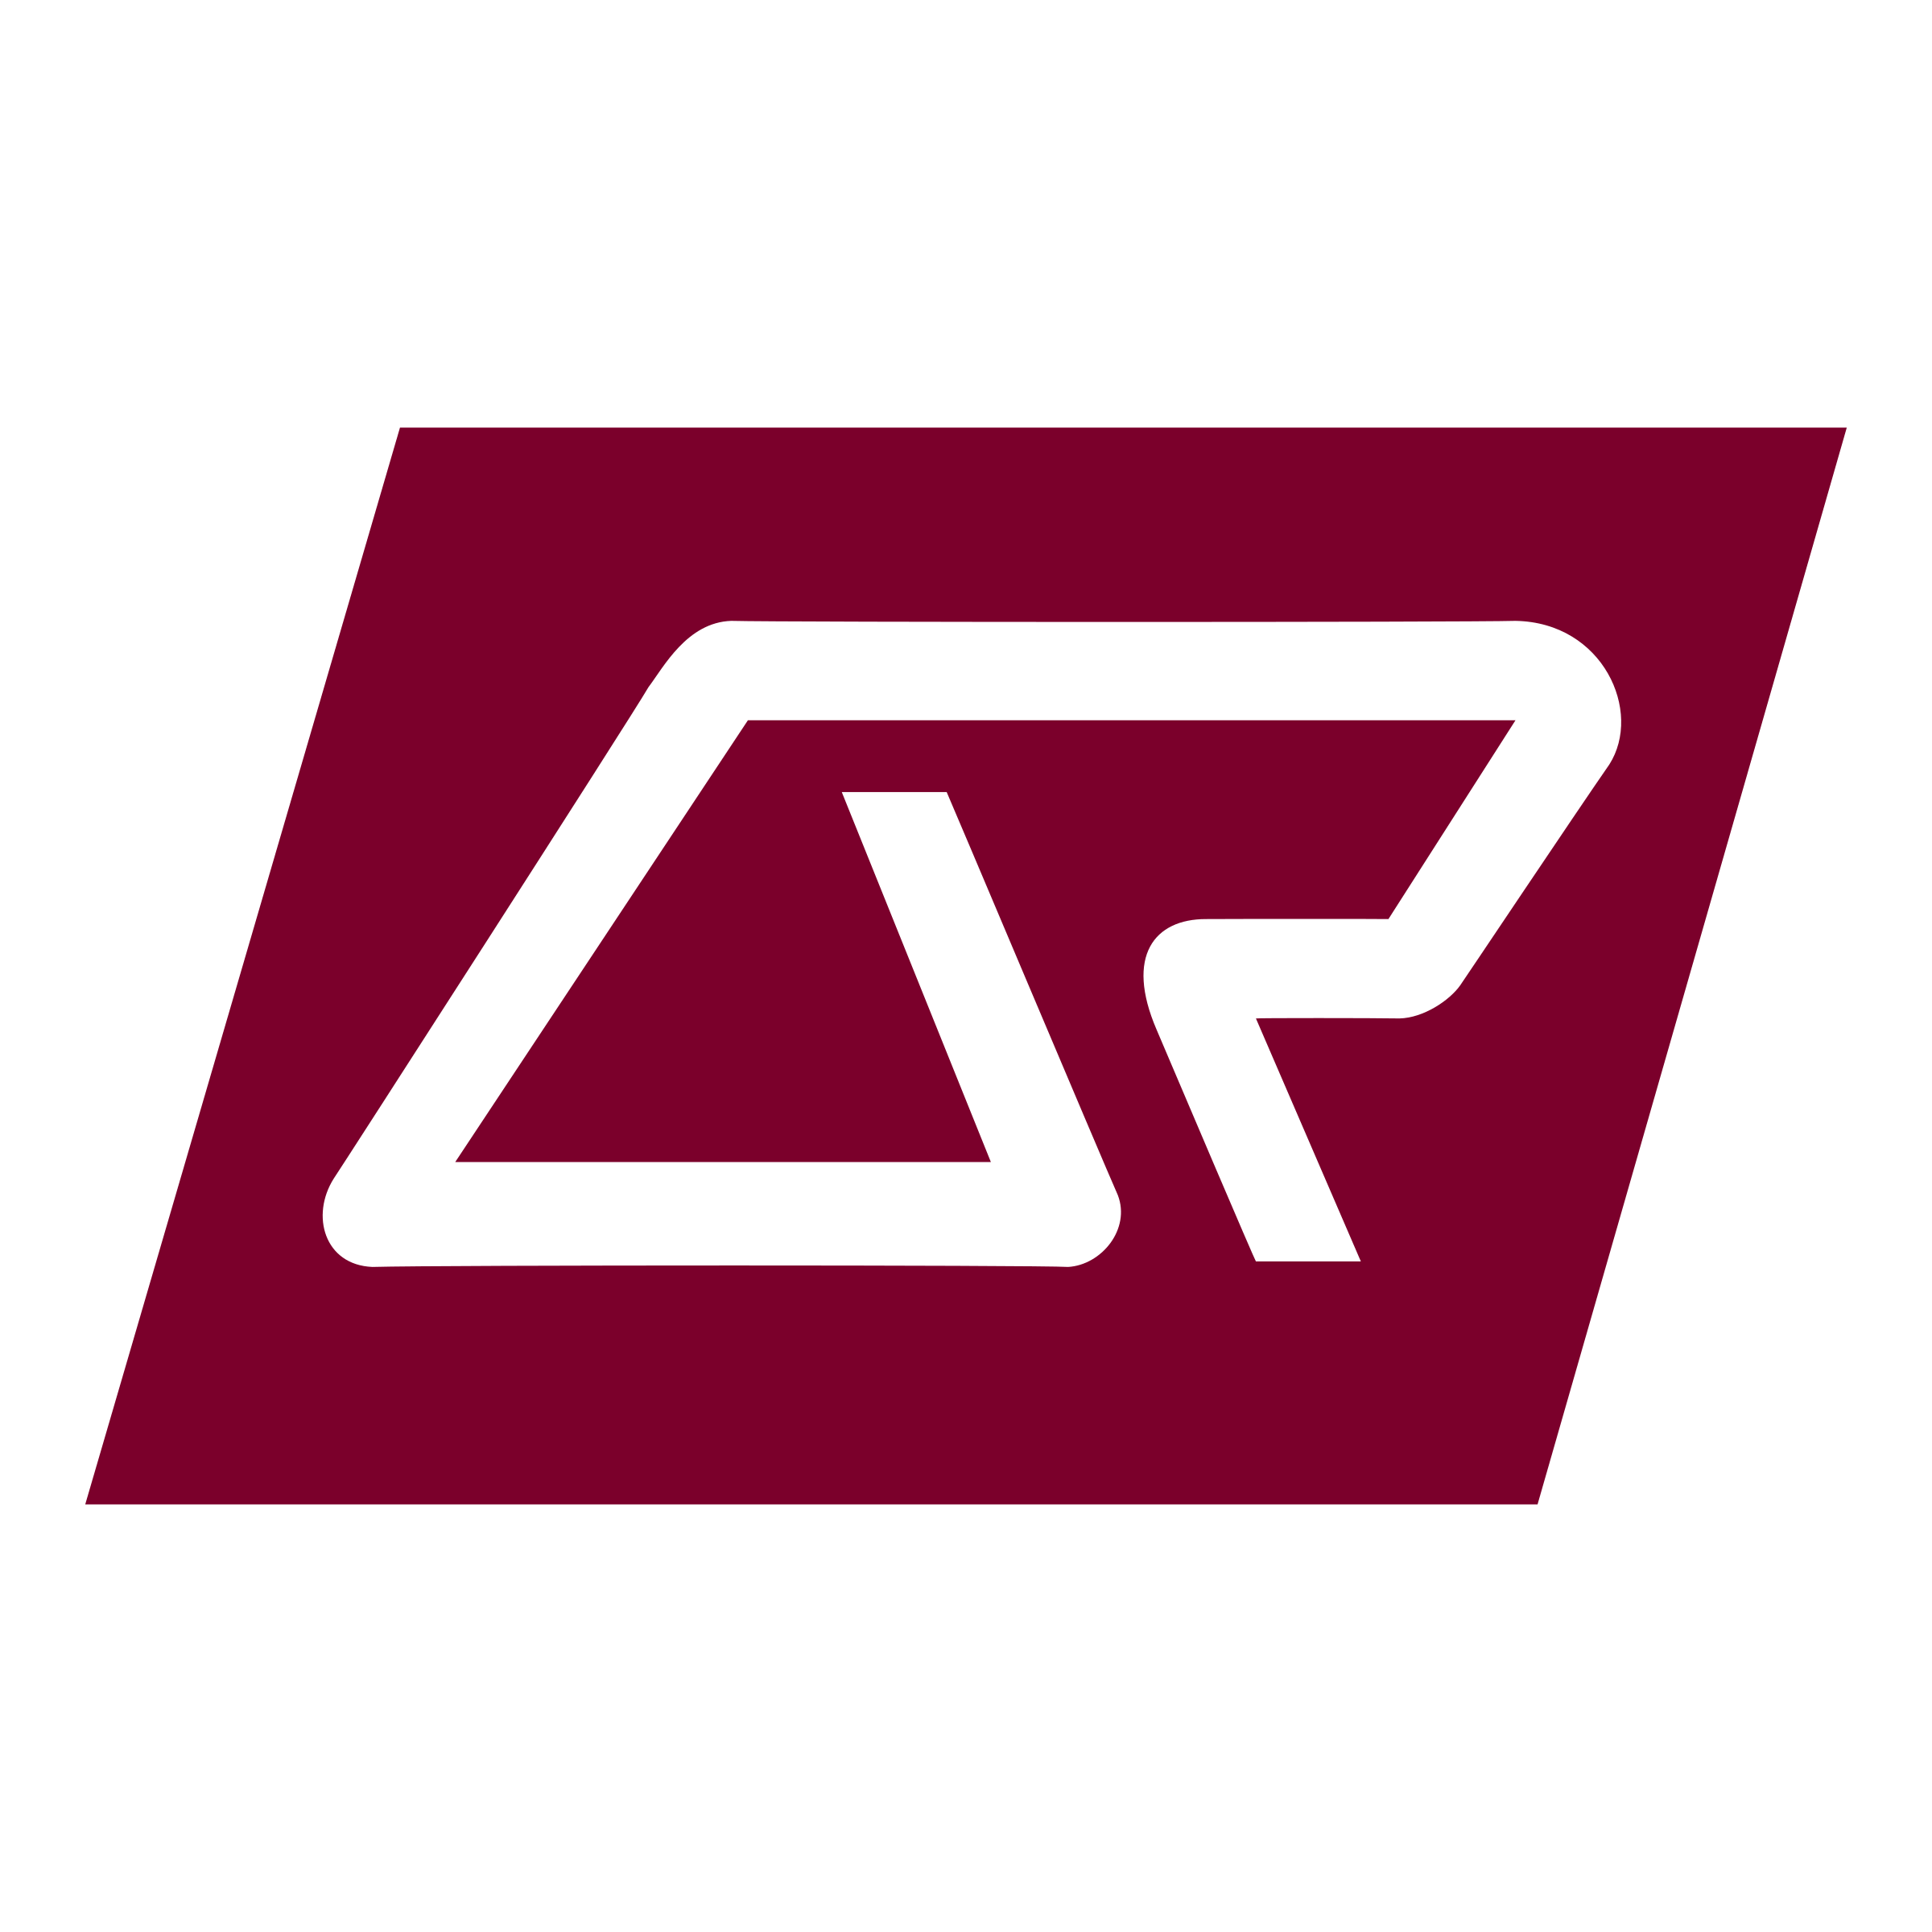 QR Logo - QR Logo PNG Transparent & SVG Vector - Freebie Supply